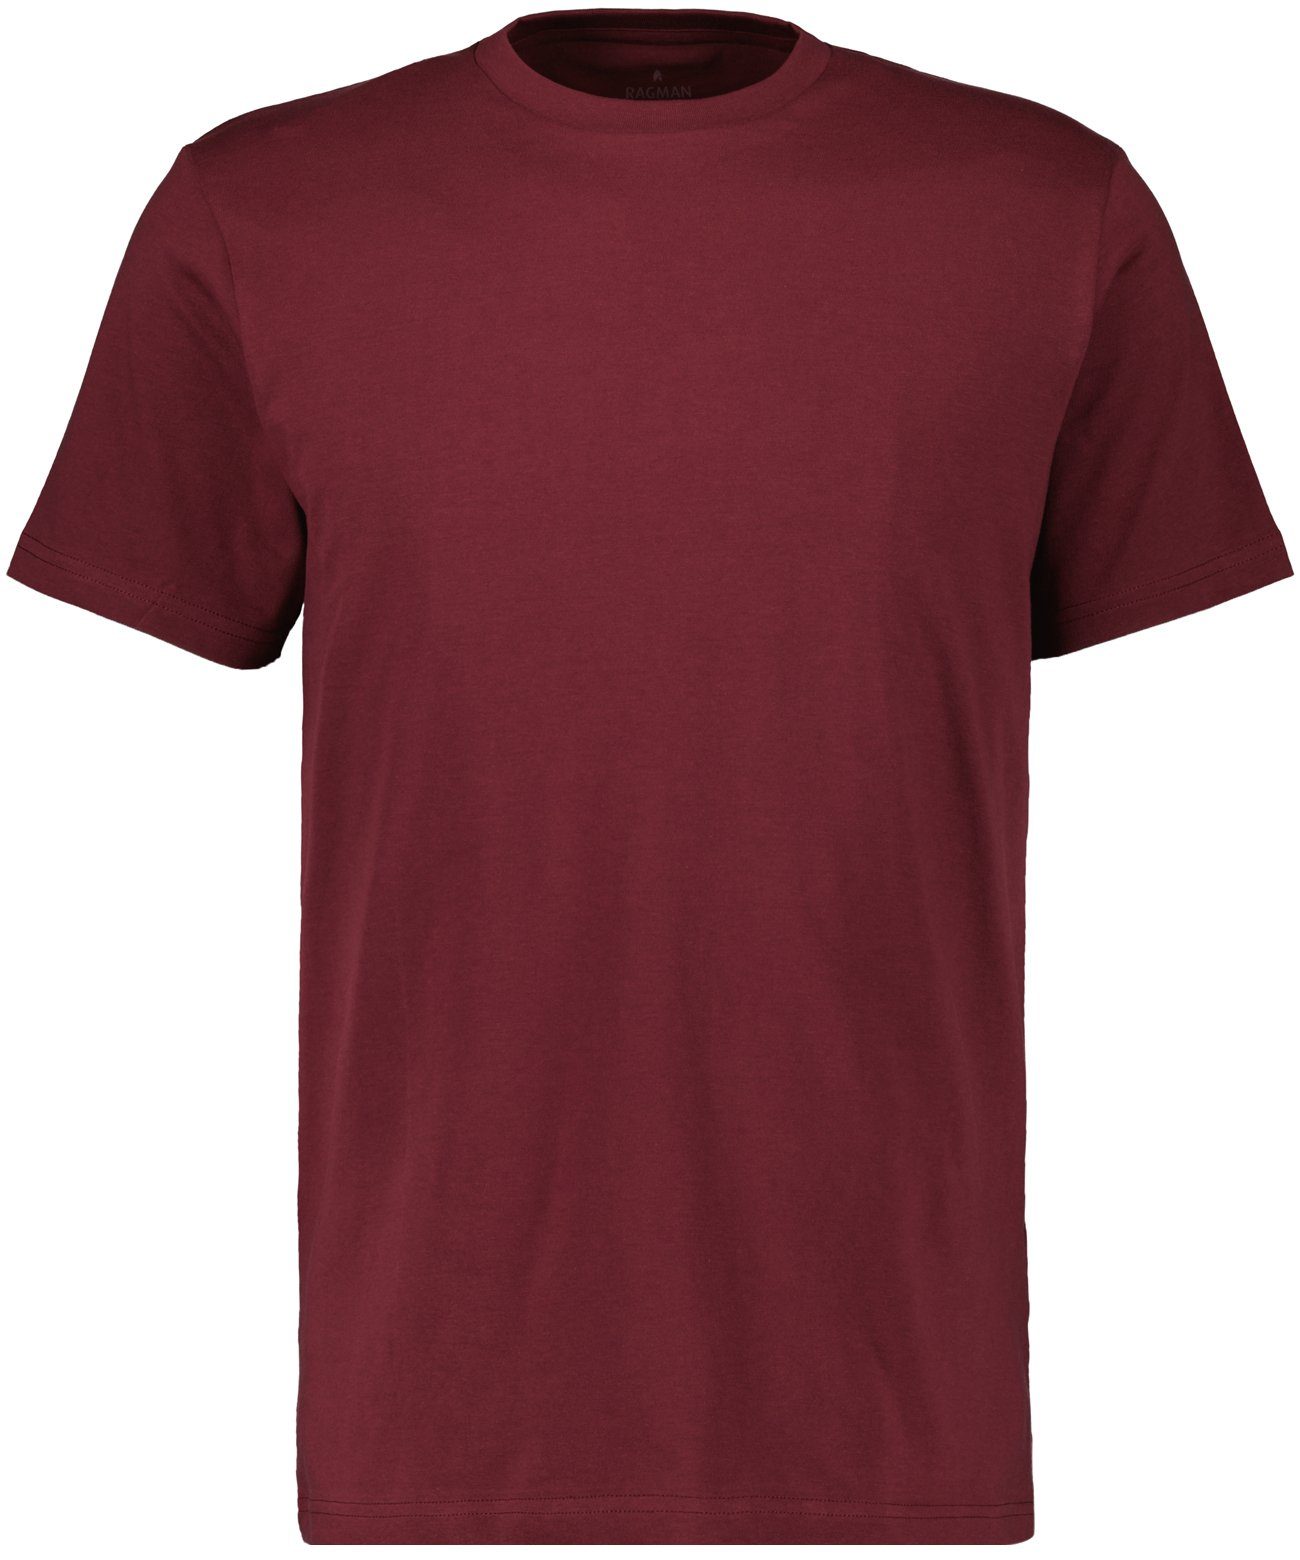 RAGMAN Barolo-684 T-Shirt